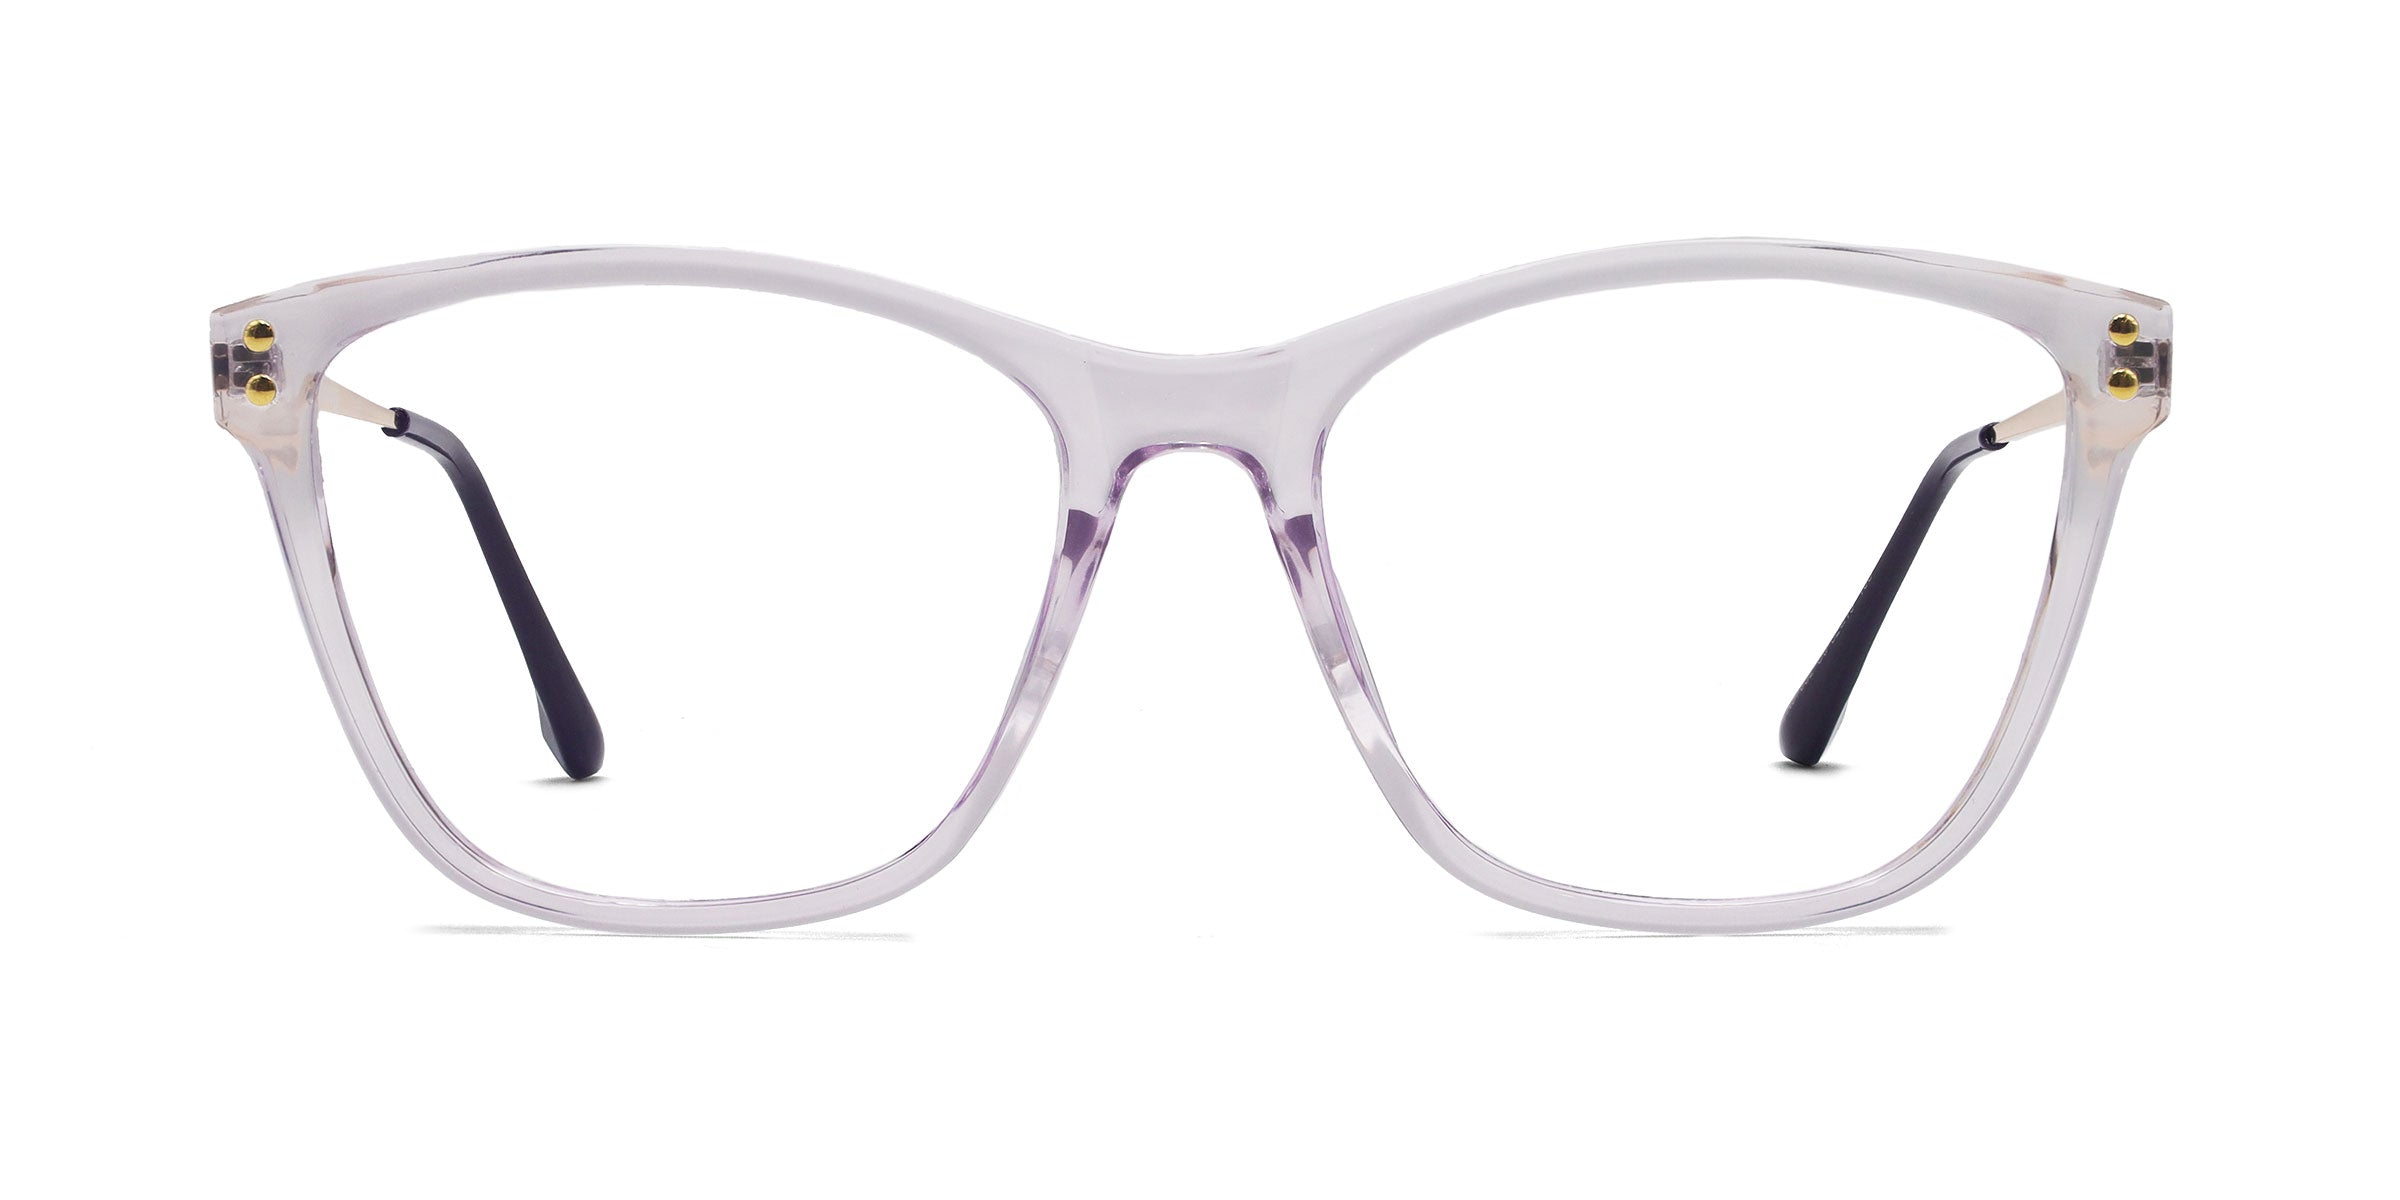 Cute Glasses - Cute Frames for Glasses - Mouqy Eyewear